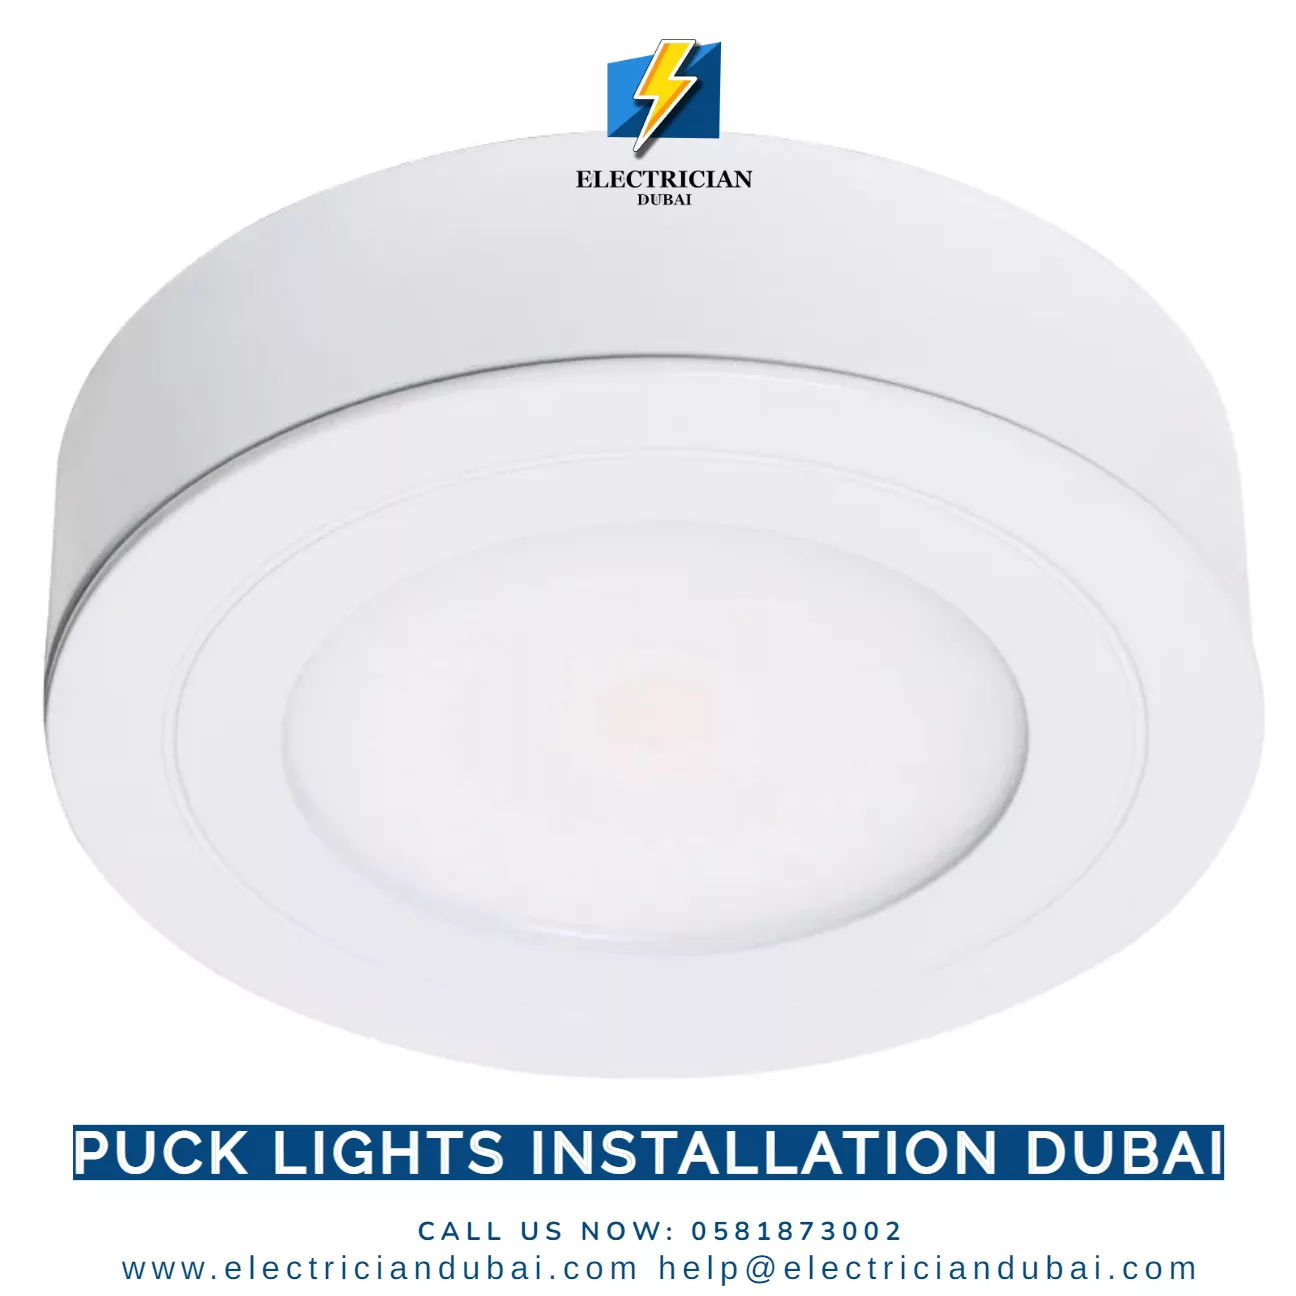 Puck Lights Installation Dubai